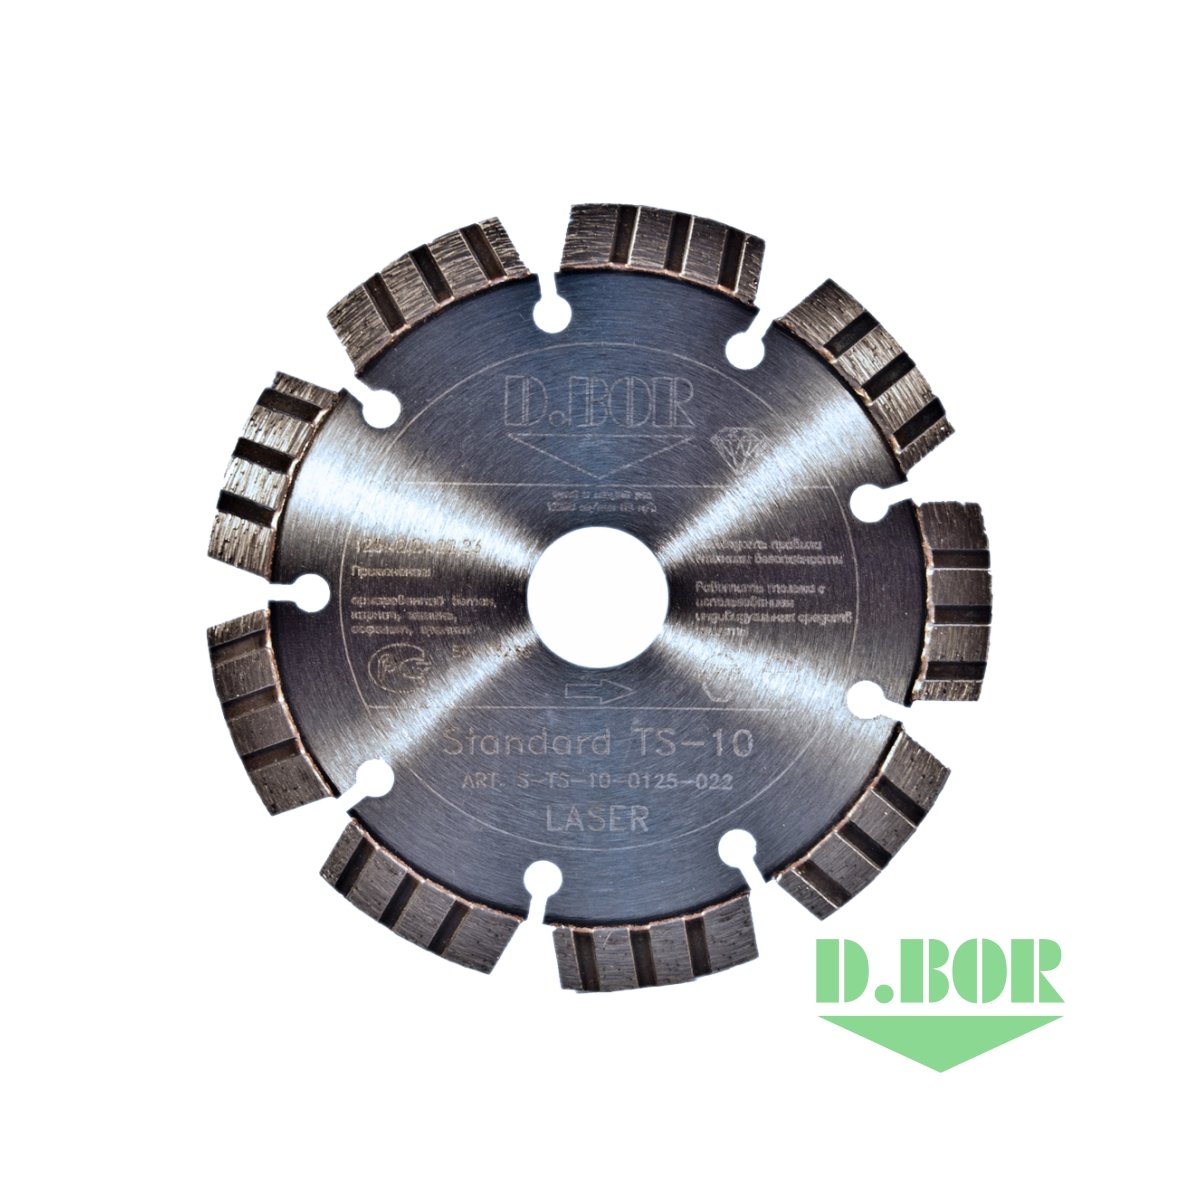 Алмазный диск Standard TS-10, 800x4,5x30/25,4 (арт. S-TS-10-0800-030) "D.BOR"